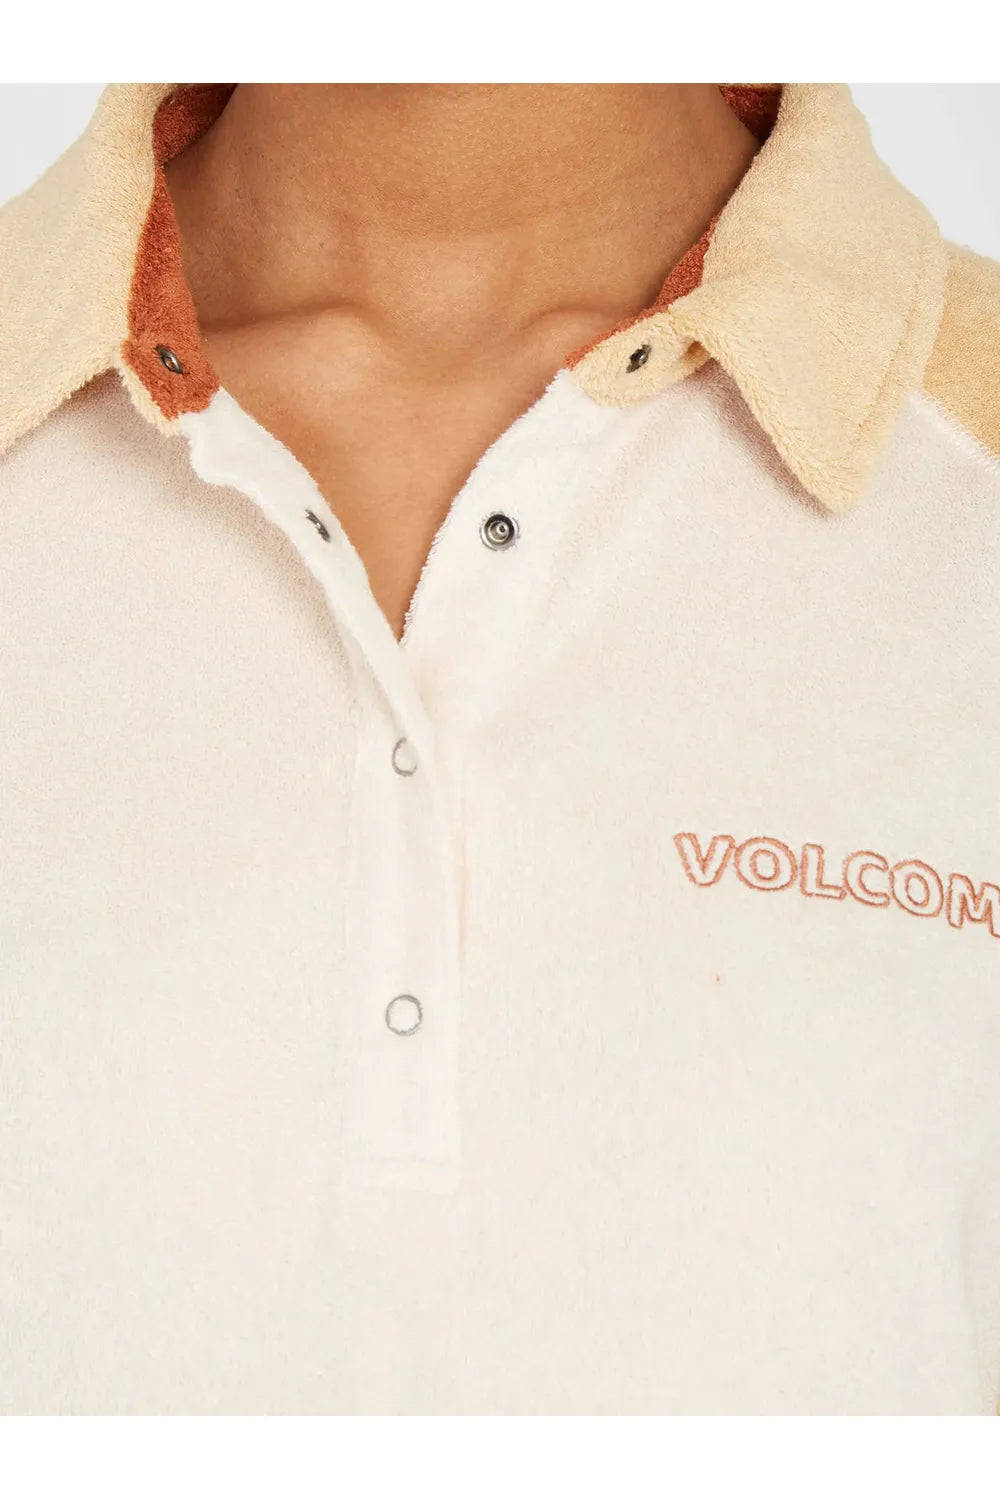 Volcom Mioumeow Pullover Sweatshirt